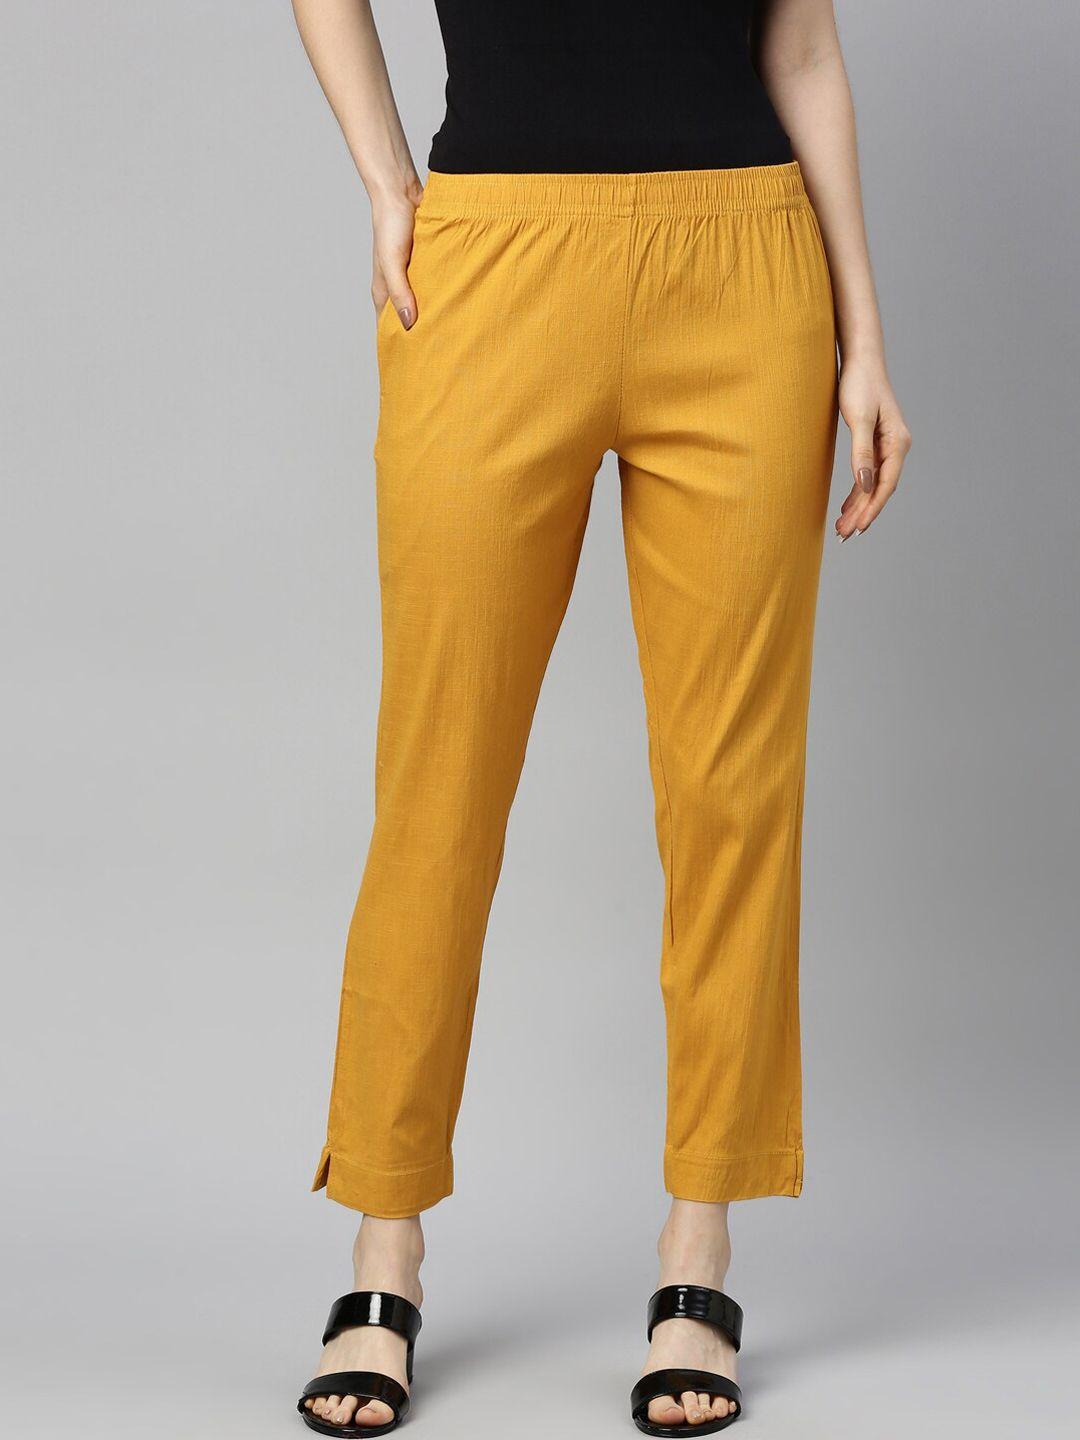 goldstroms women mustard yellow cotton trousers